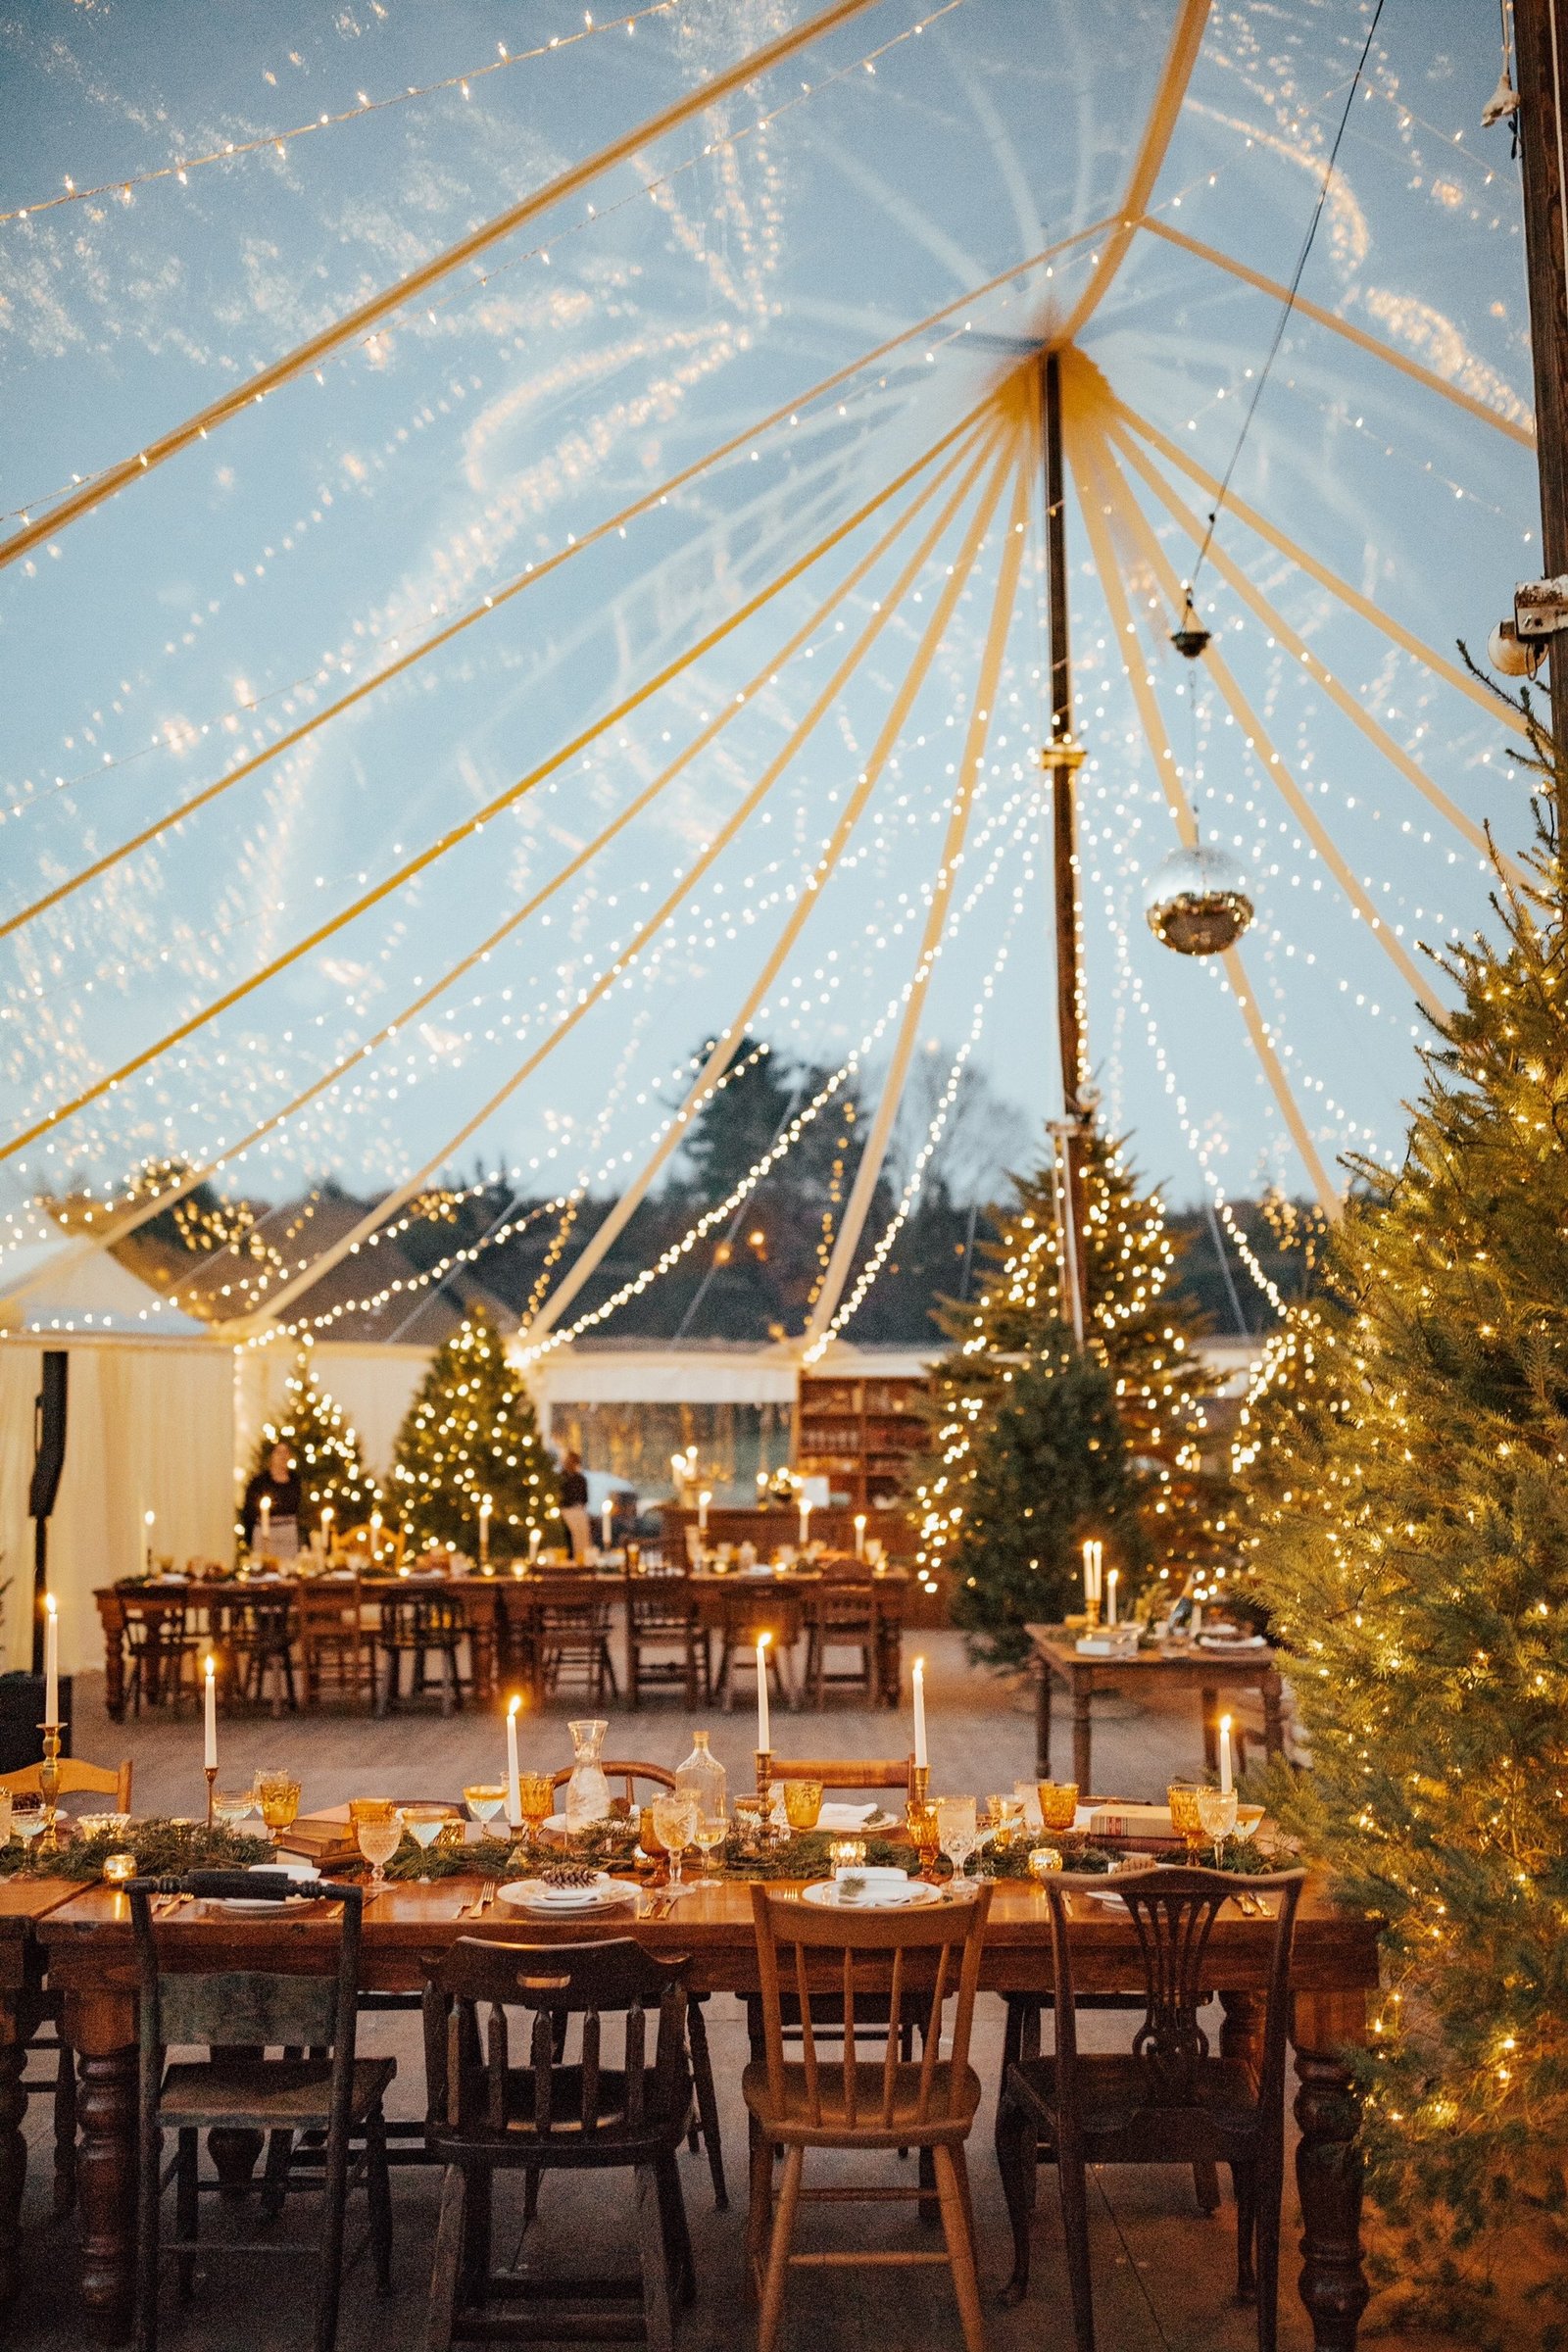 Christy-l-Johnston-Photography-Monica-Relyea-Events-Noelle-Downing-Instagram-Noelle_s-Favorite-Day-Wedding-Battenfelds-Christmas-tree-farm-Red-Hook-New-York-Hudson-Valley-upstate-november-2019-IMG_6638